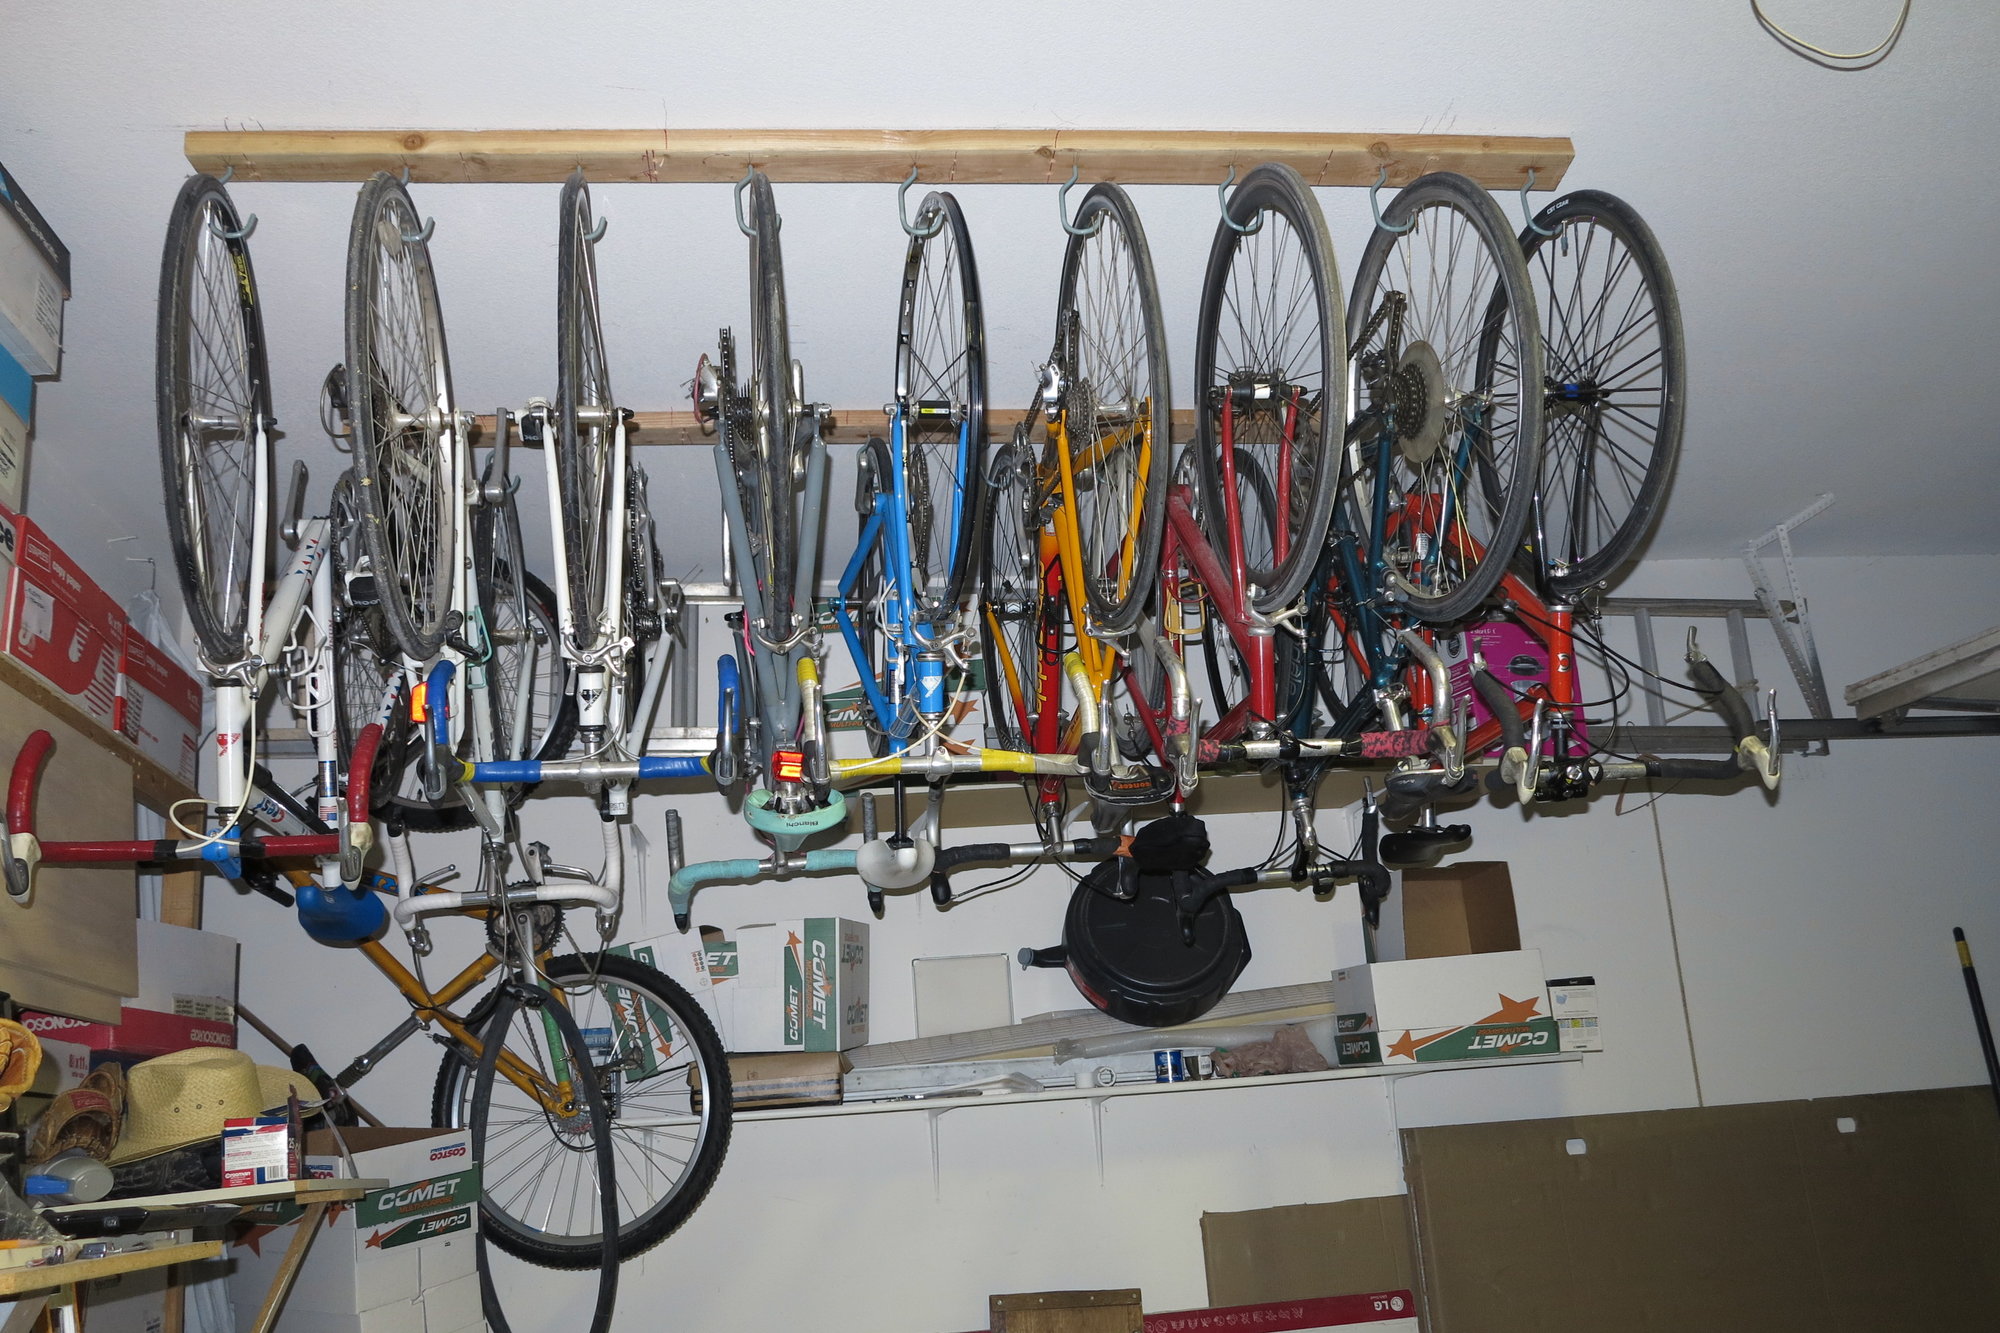 Best Way to Hang Bike in Garage - Page 2 - Bike Forums